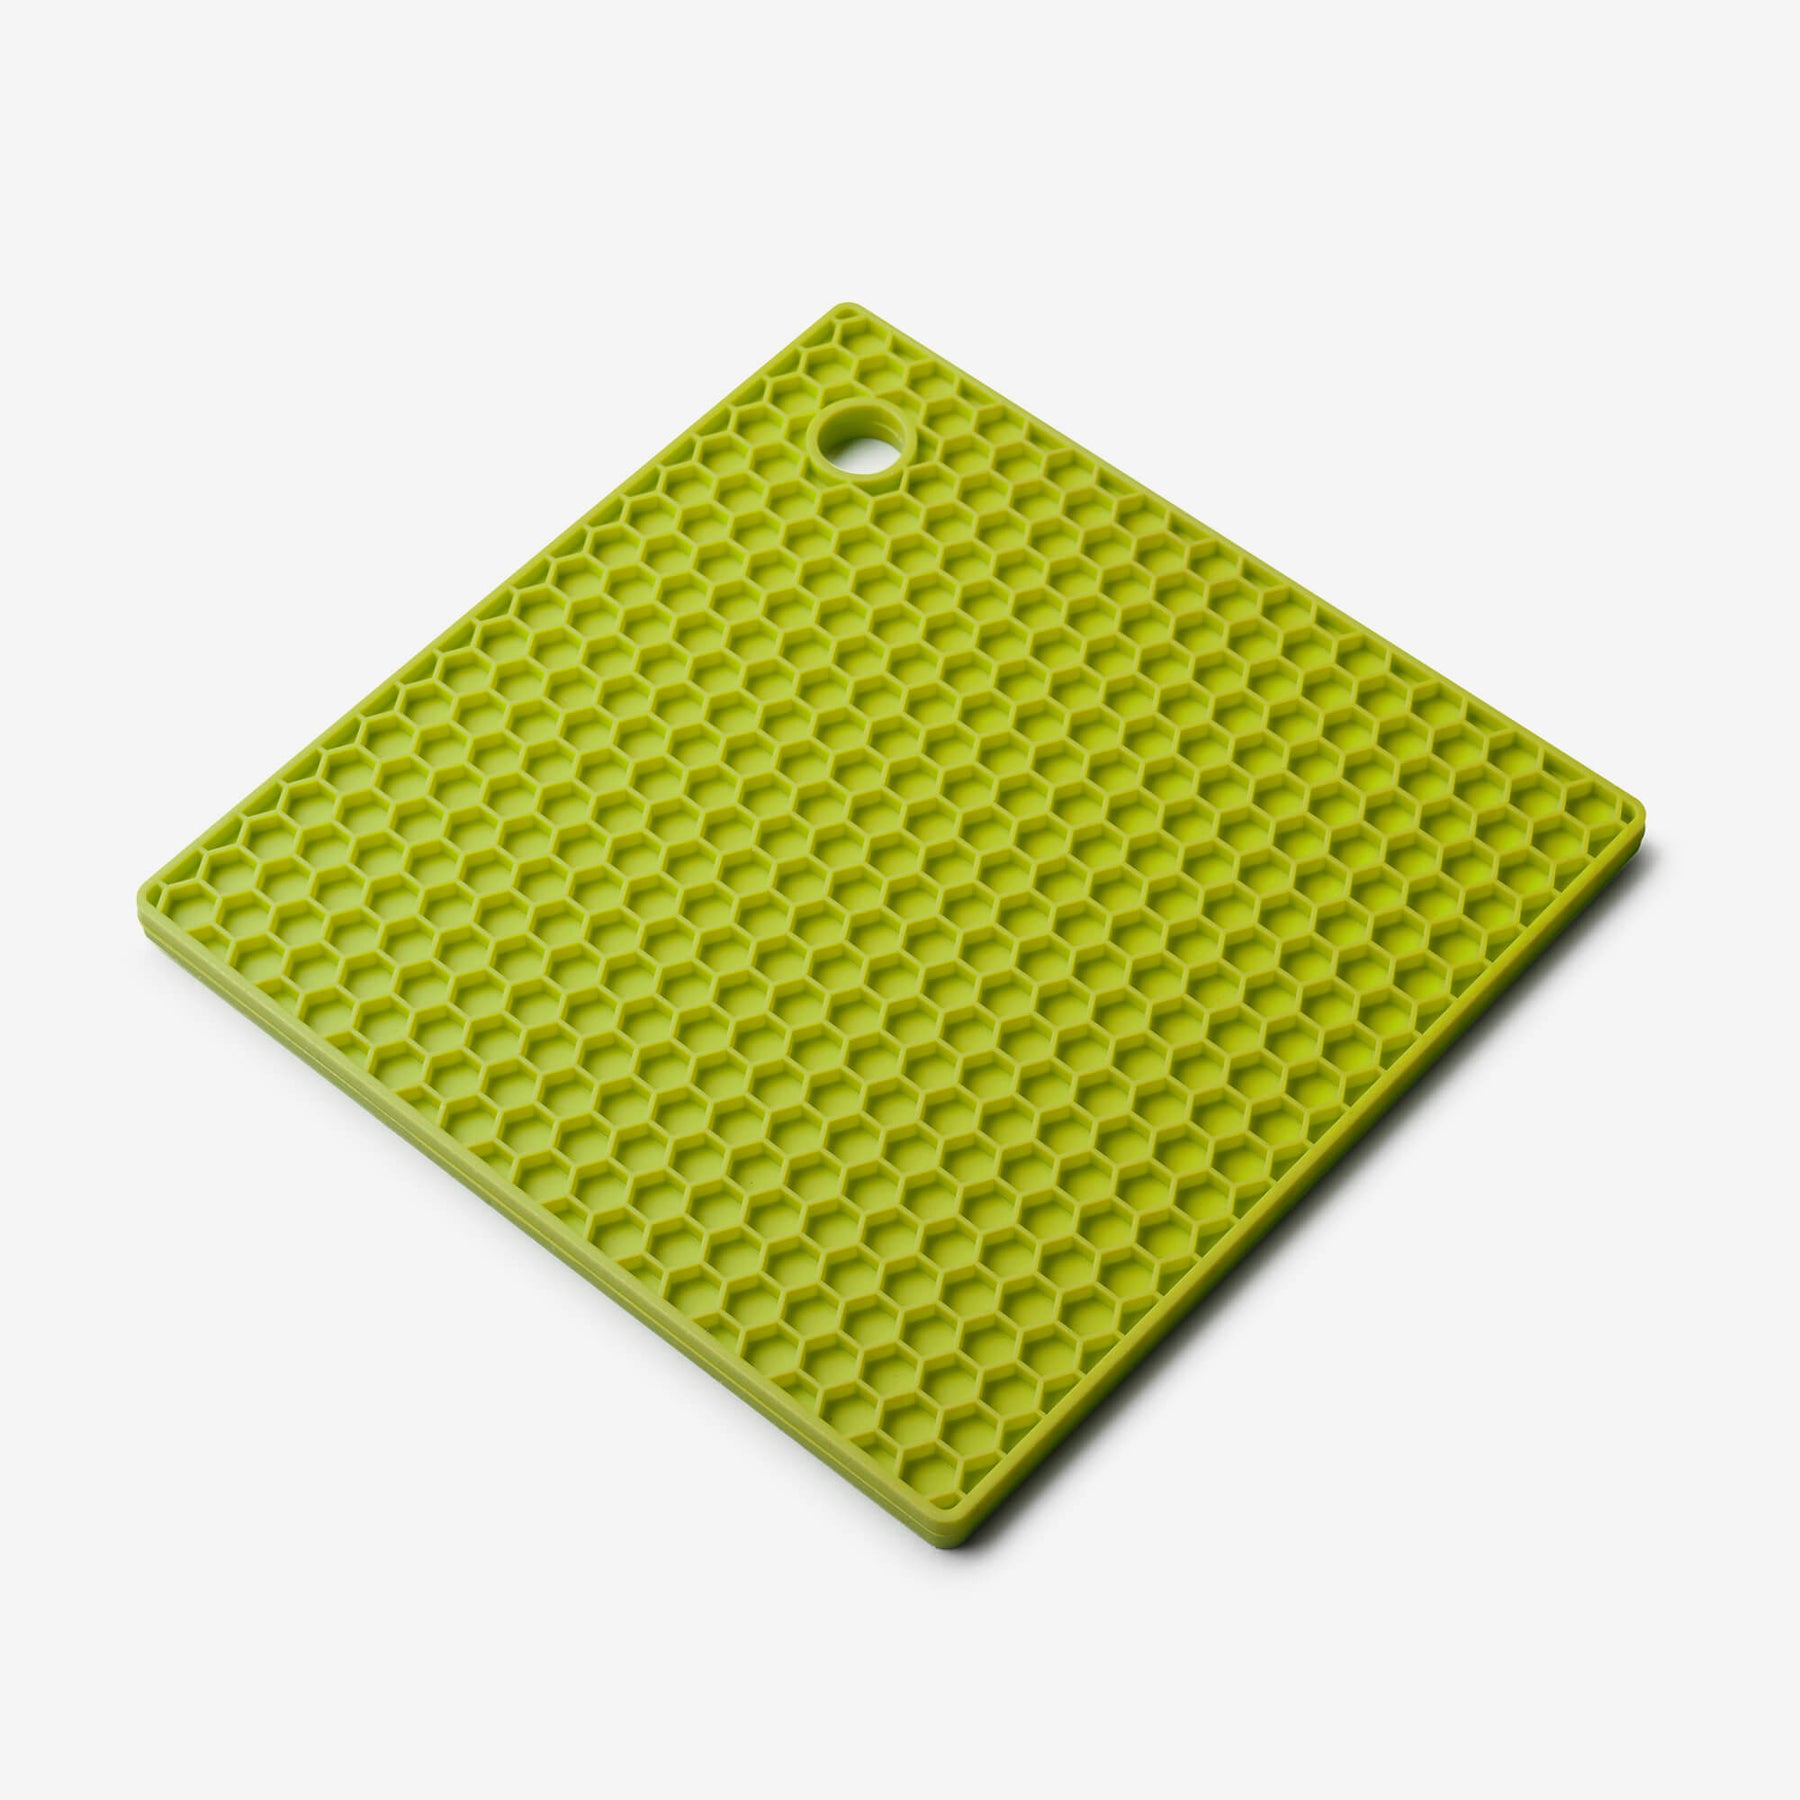 Honeycomb Silicone Trivet Mat